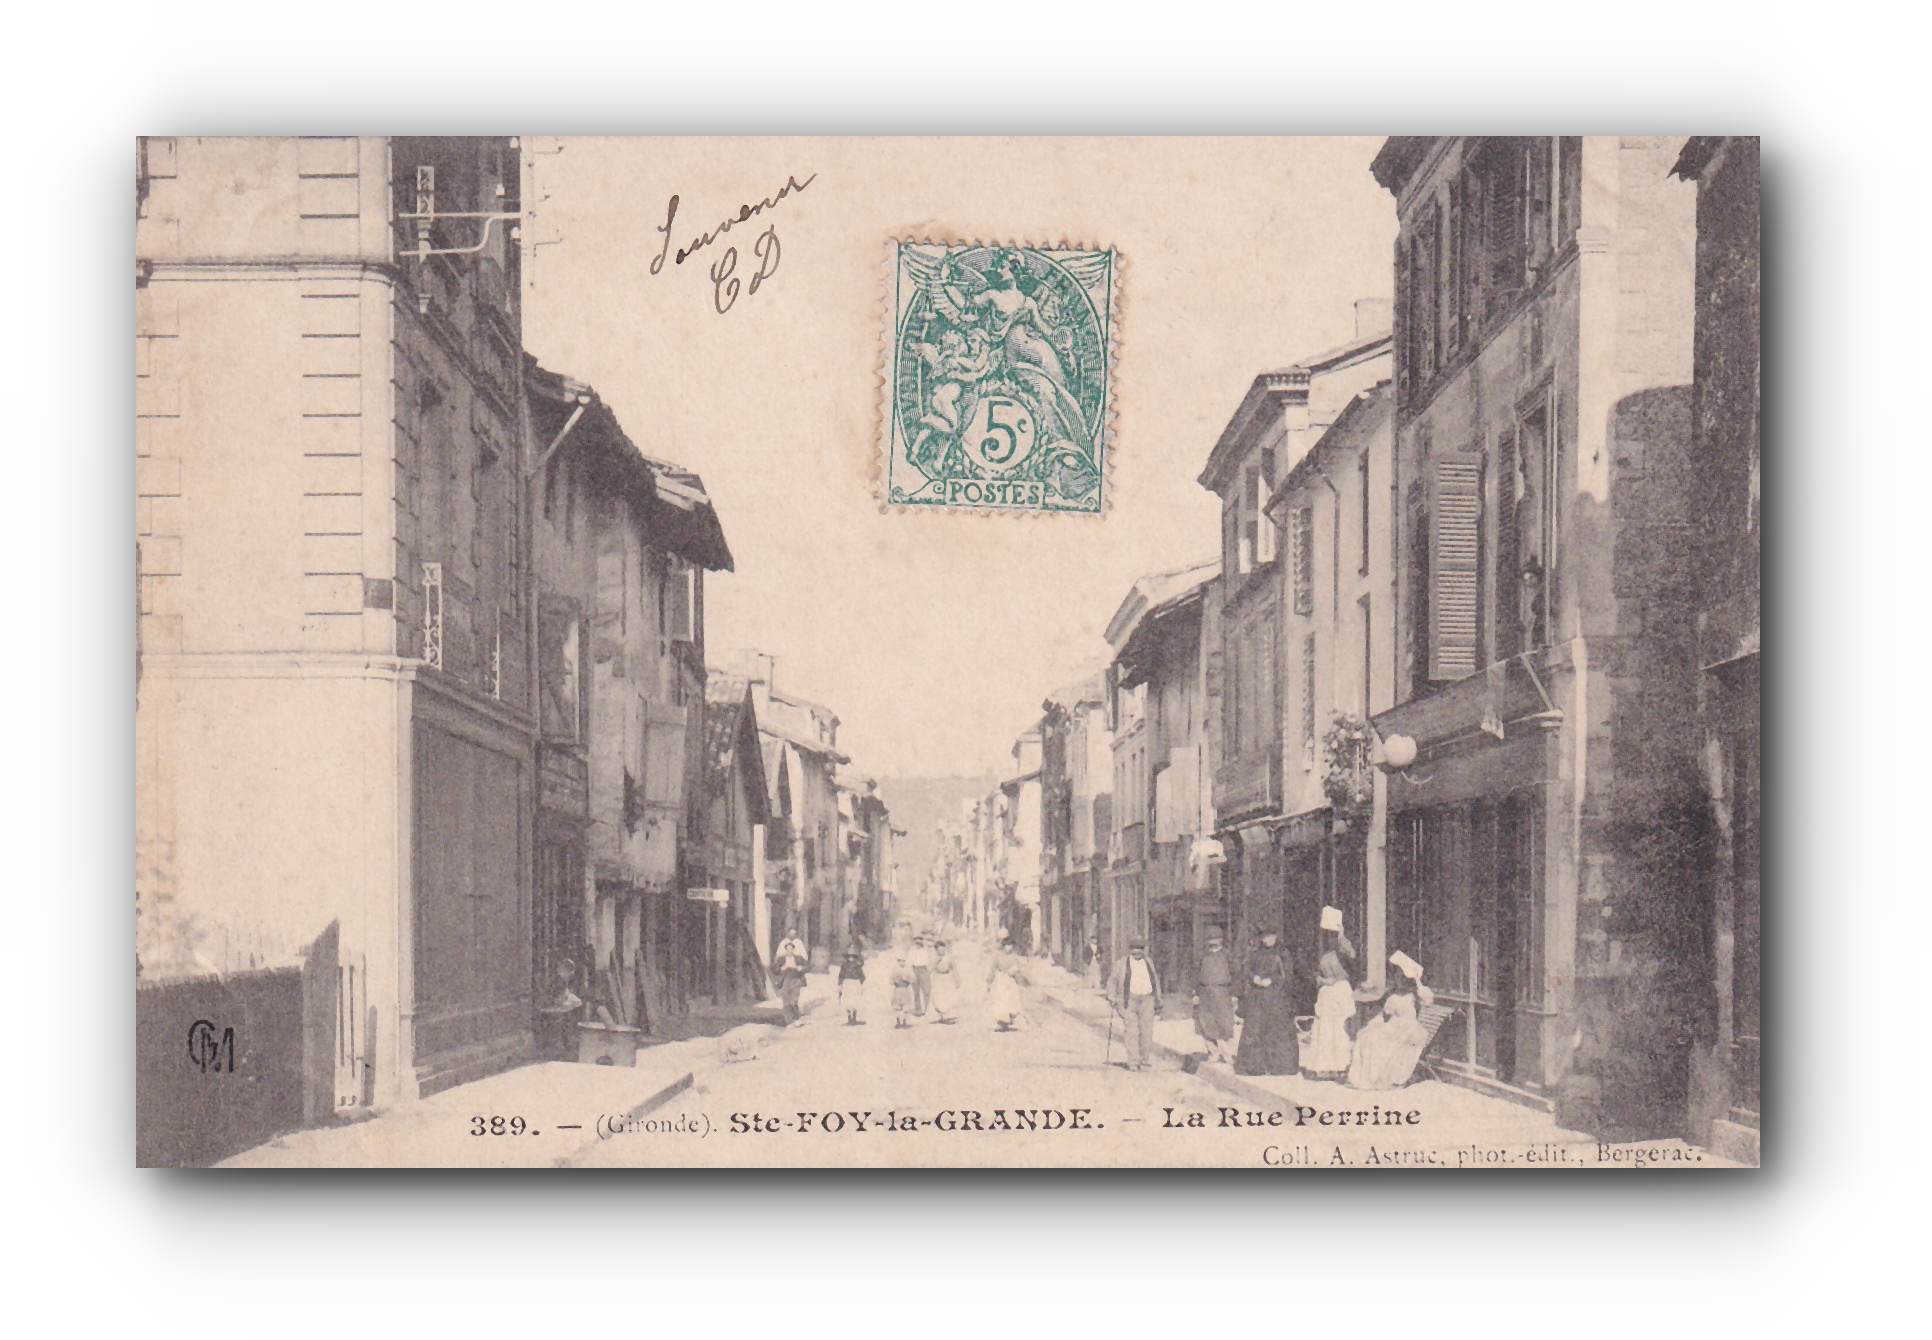 - Ste - FOY - la - GRANDE - La Rue Perrine - 16.09.1905 -